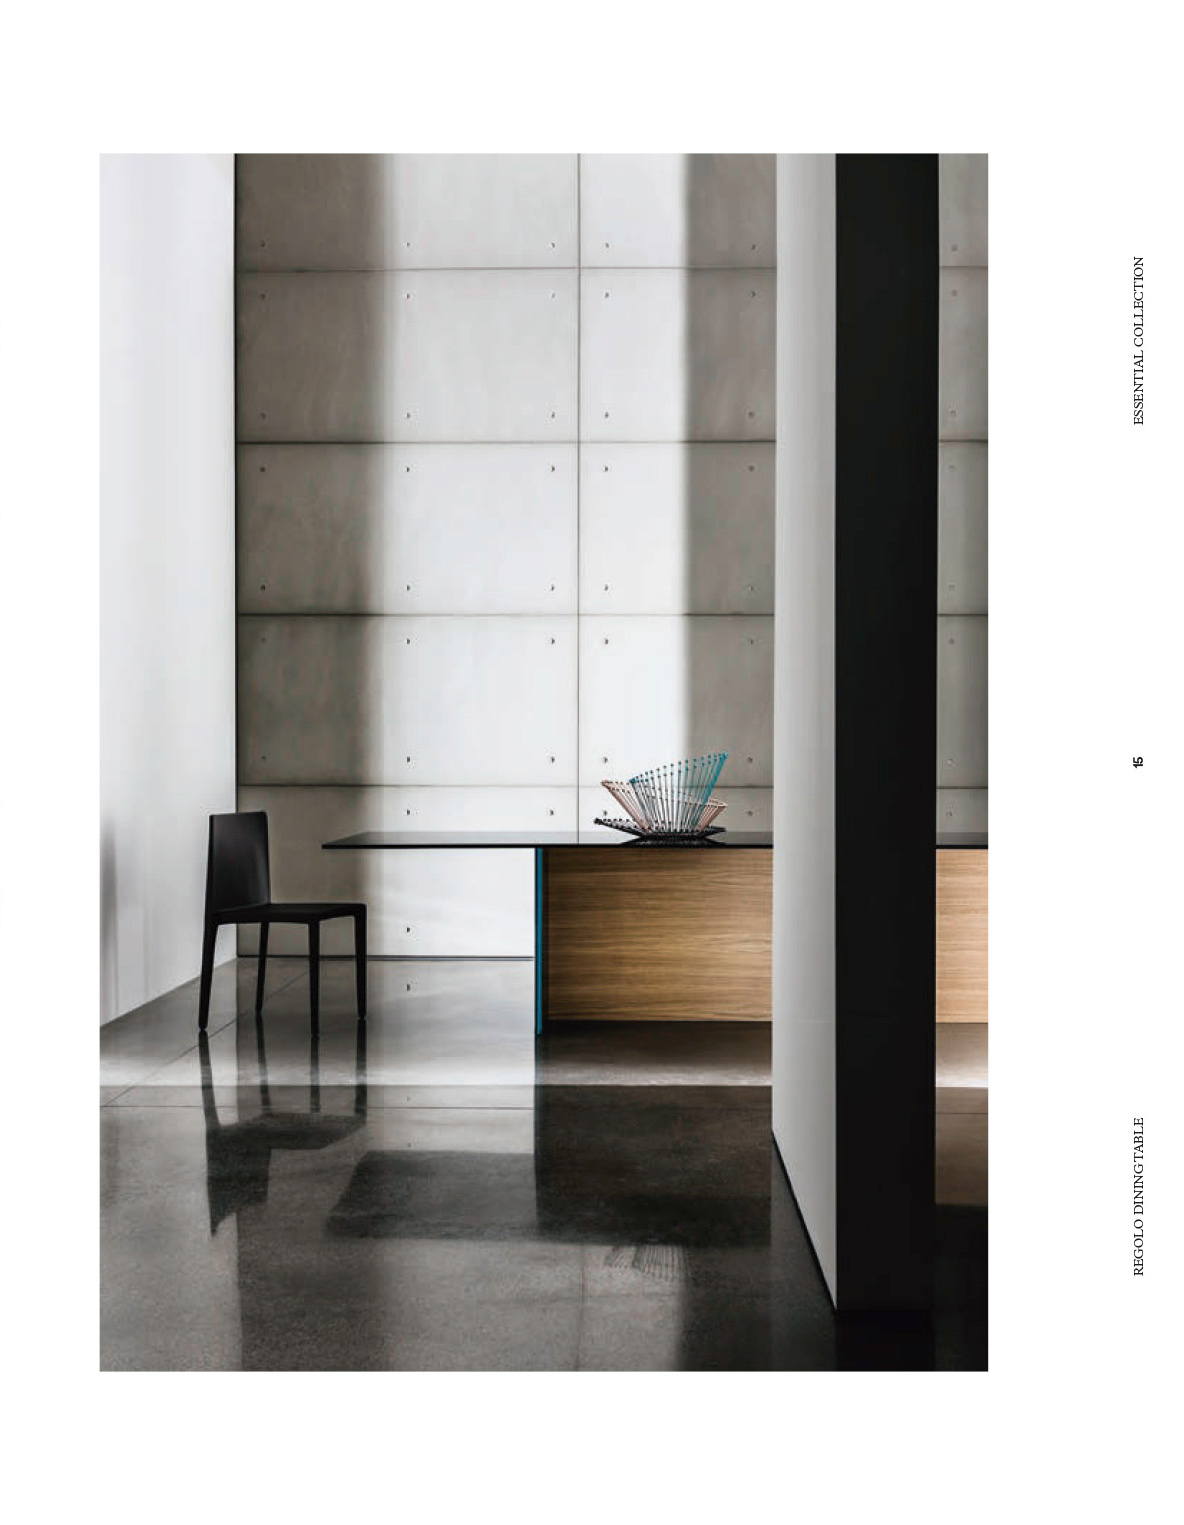 Adobe Portfolio Pennati design Lux landoni sovet glass black table Interior molina Lievore product light